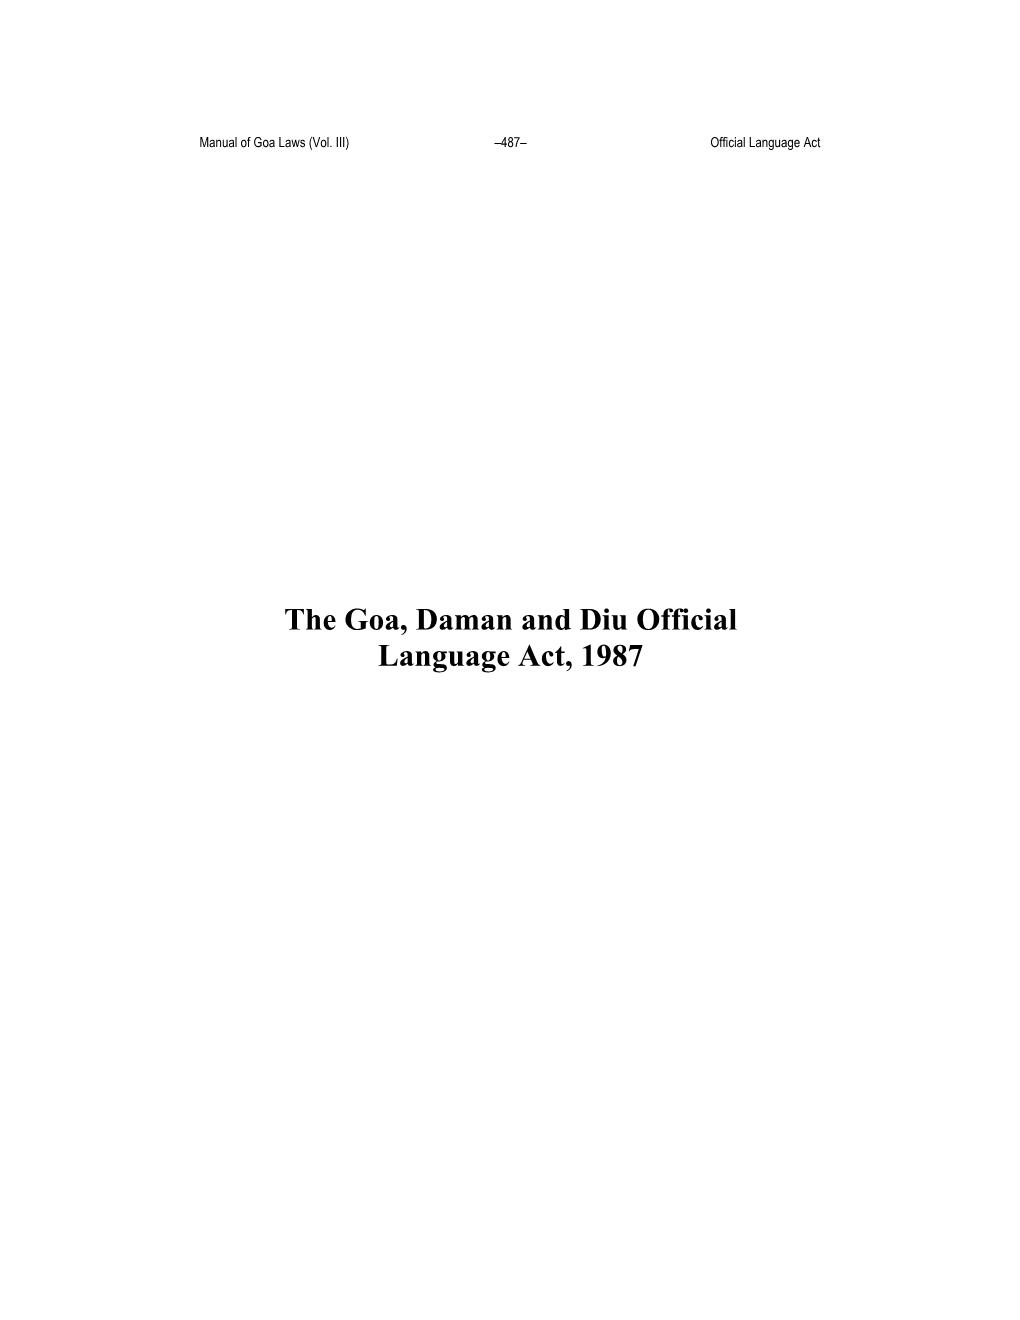 The Goa, Daman and Diu Official Language Act, 1987 Manual of Goa Laws (Vol